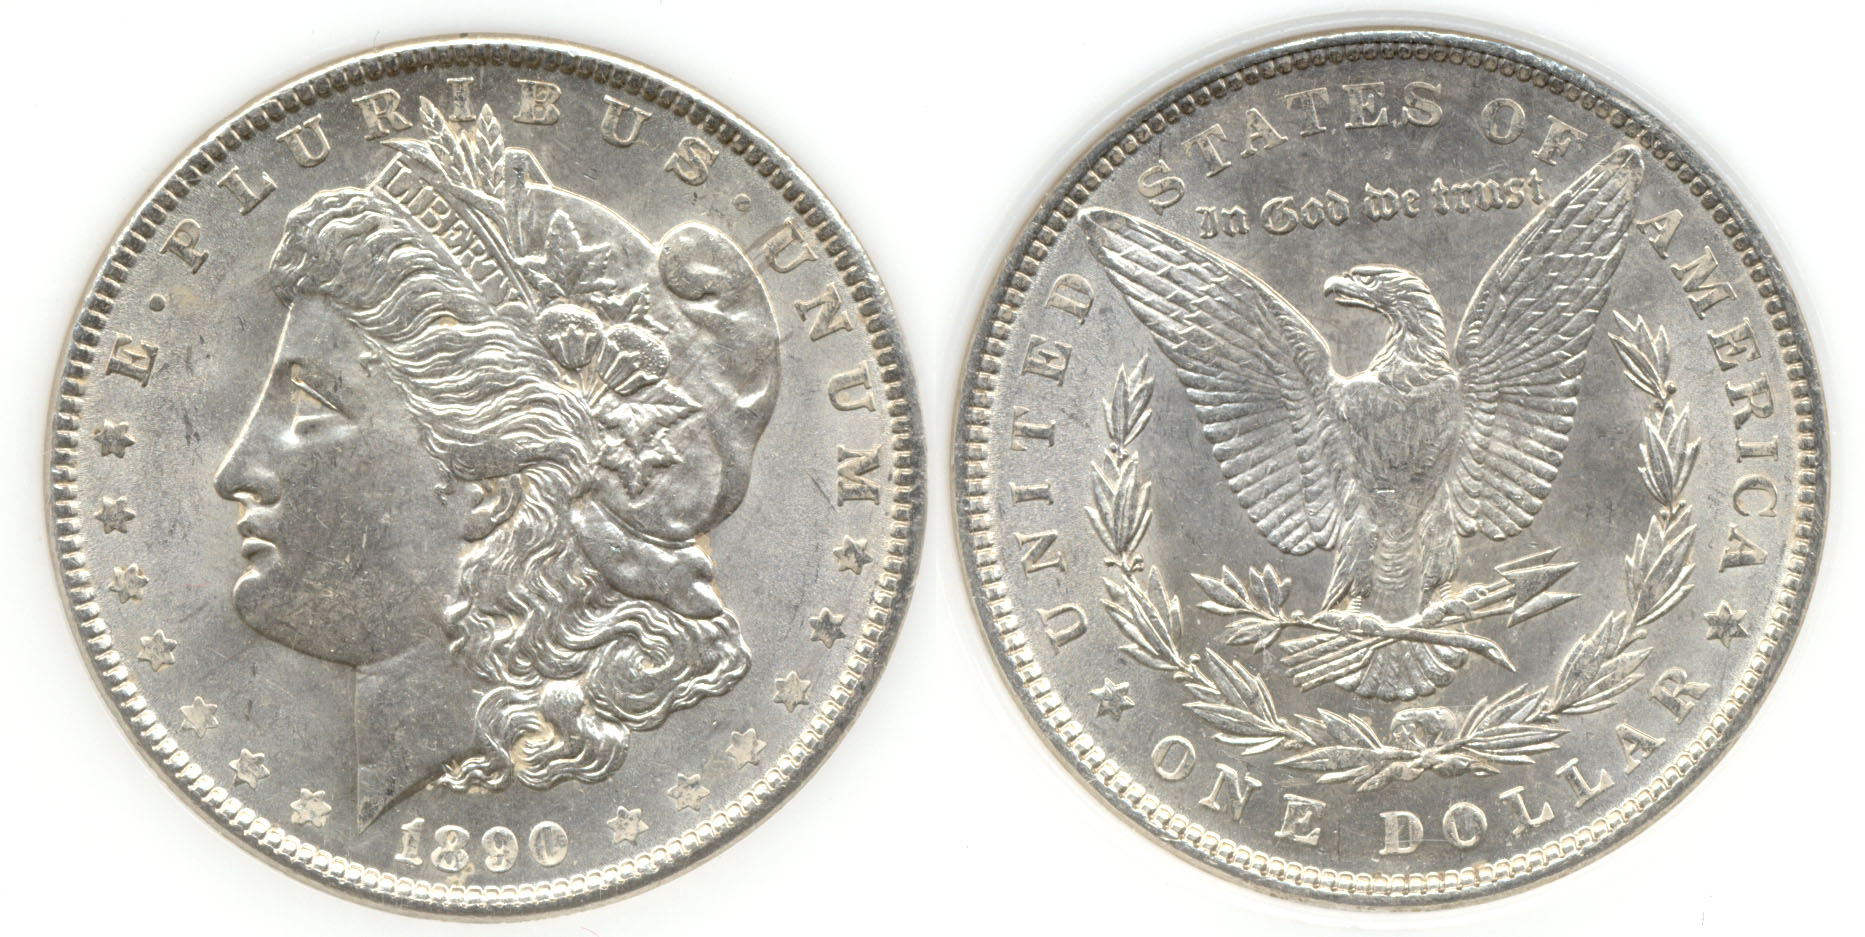 1890 Morgan Silver Dollar PCI MS-64